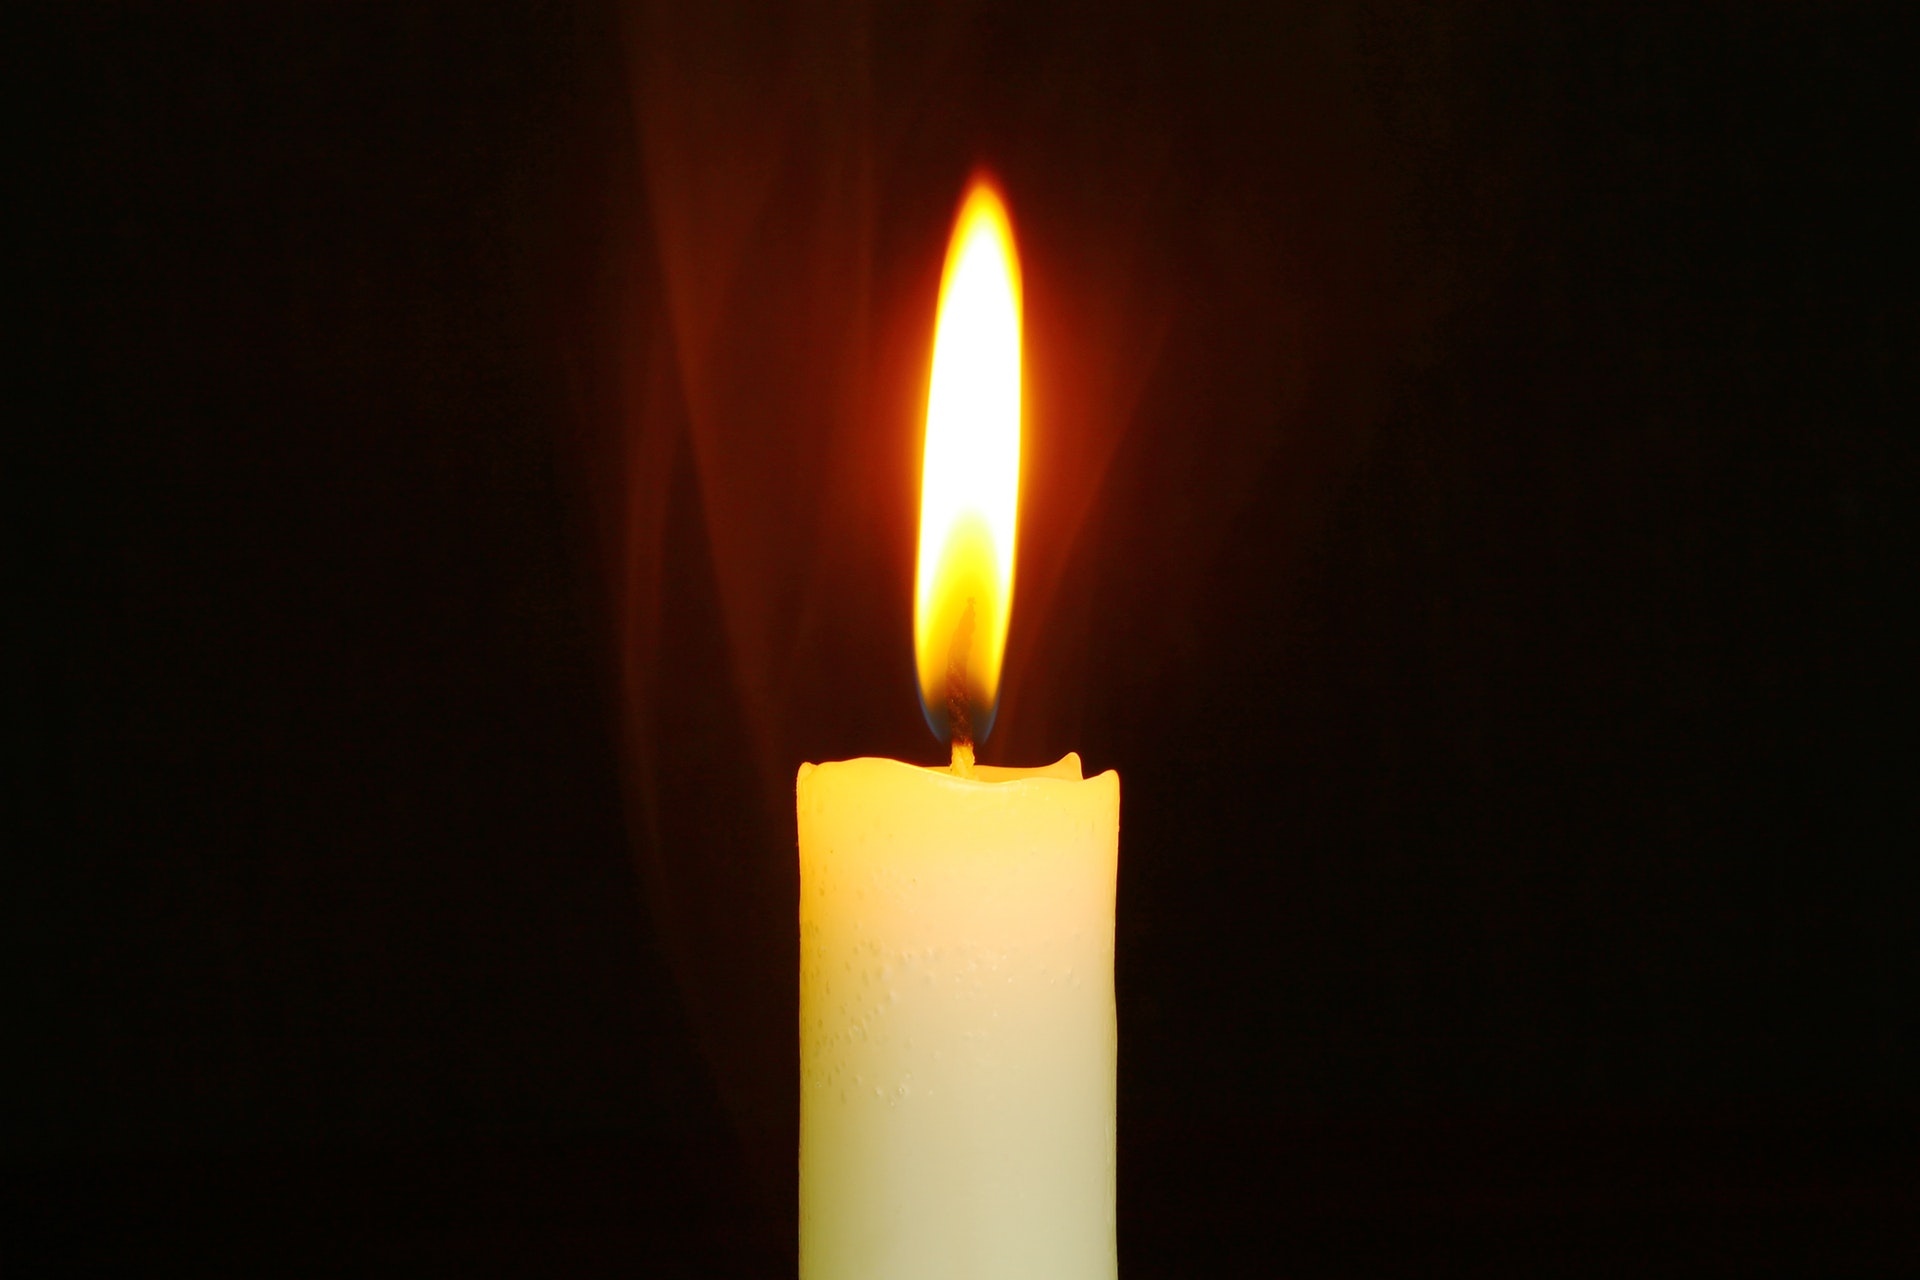 lit candle on black background